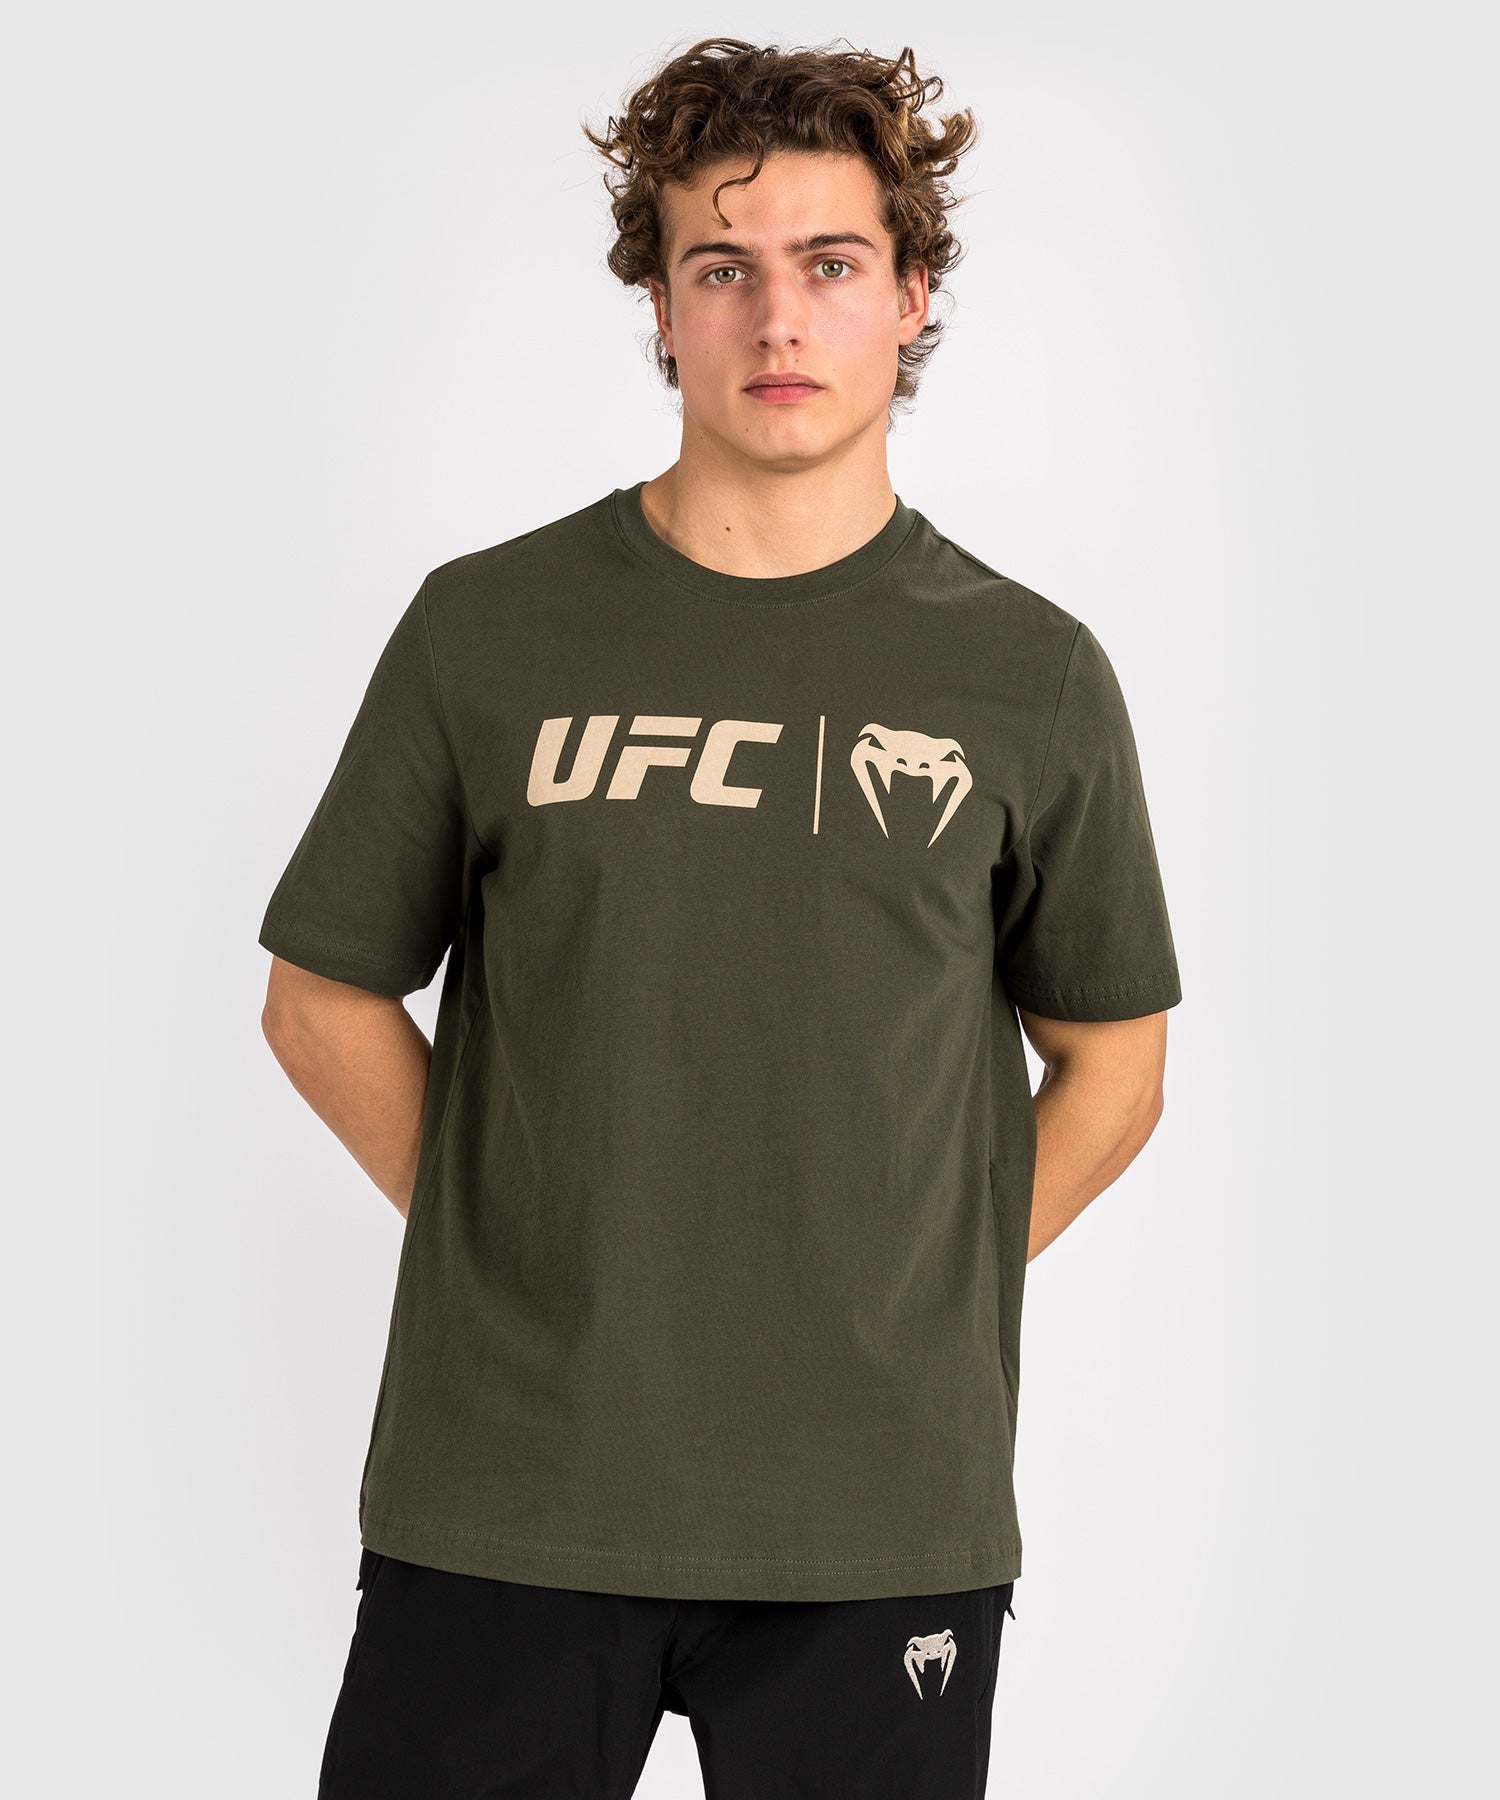 T-shirt Venum UFC classique